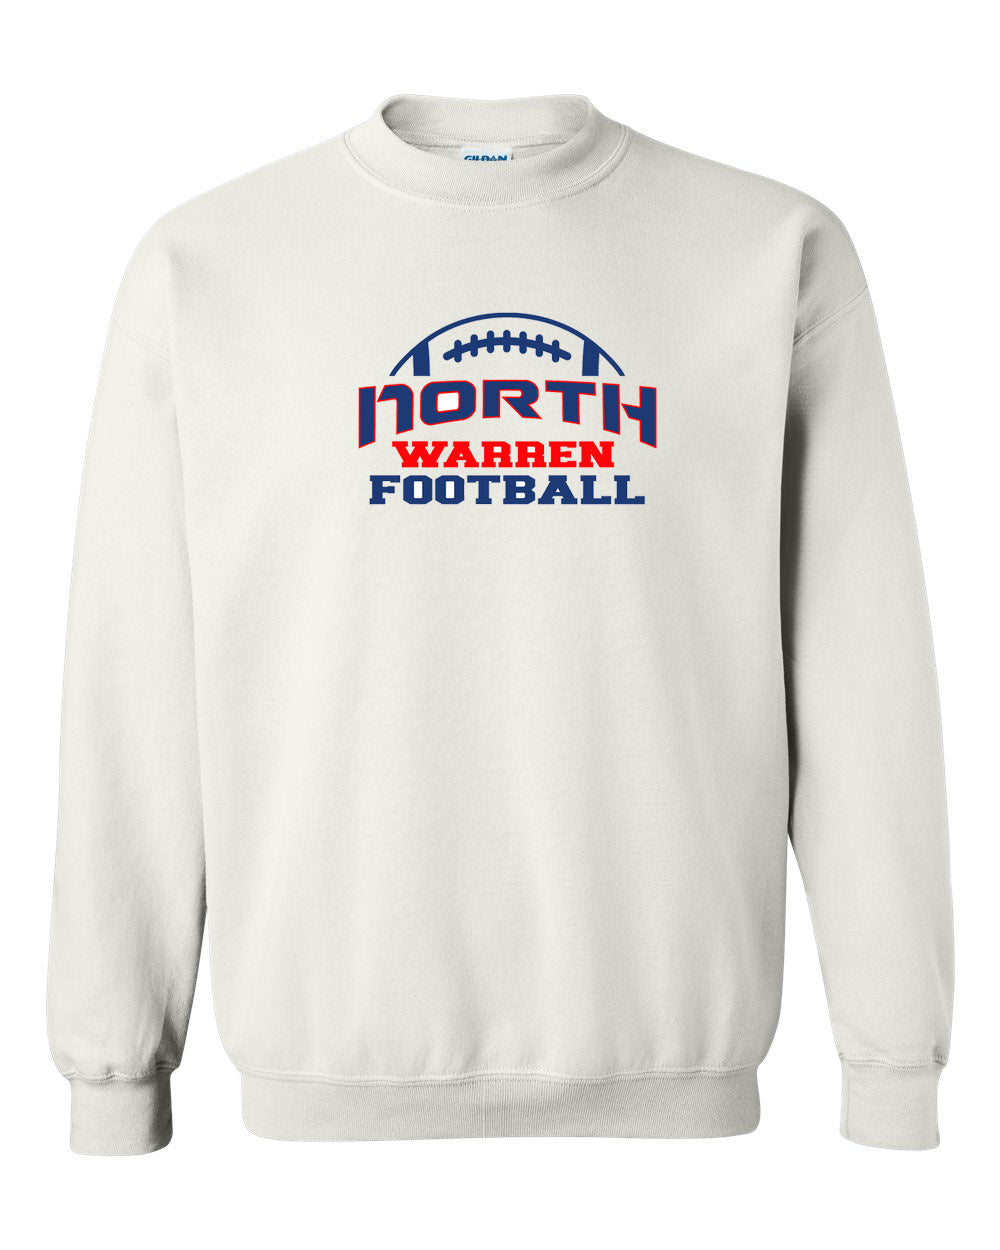 NW Football Design 1 non hooded sweatshirt